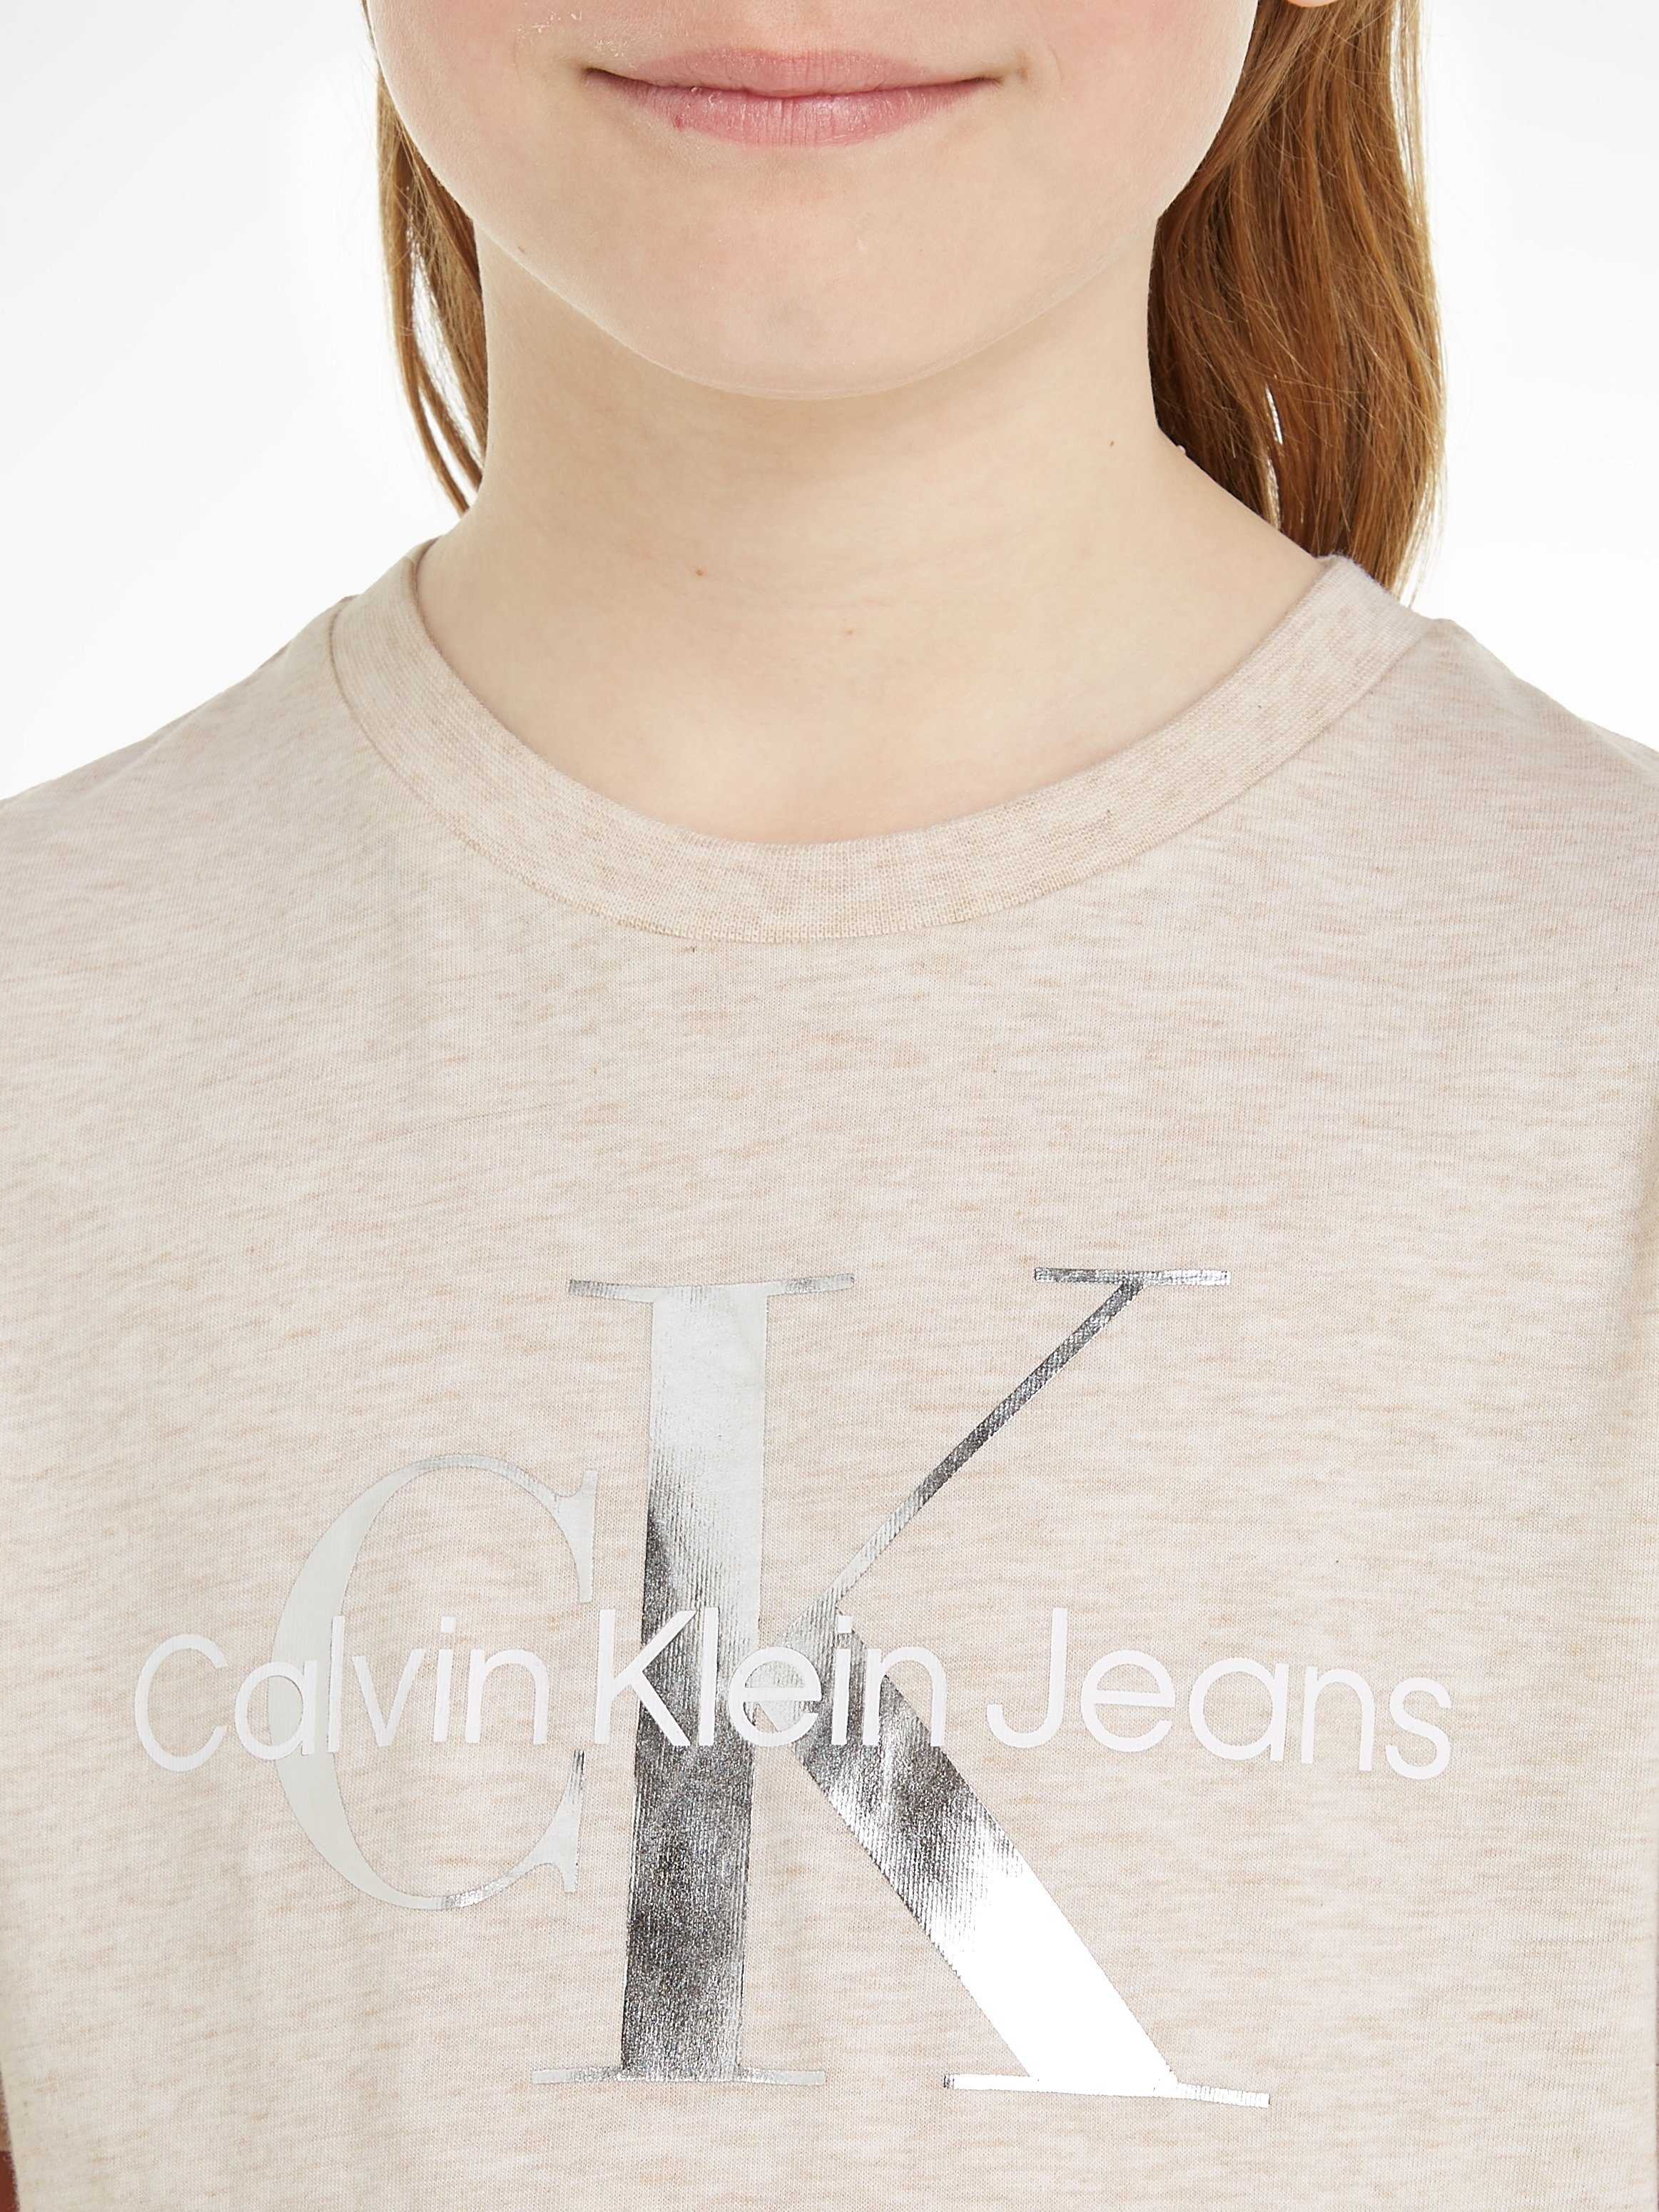 Calvin Klein Jeans Heather Vanilla MONOGRAM SS T-Shirt T-SHIRT CK